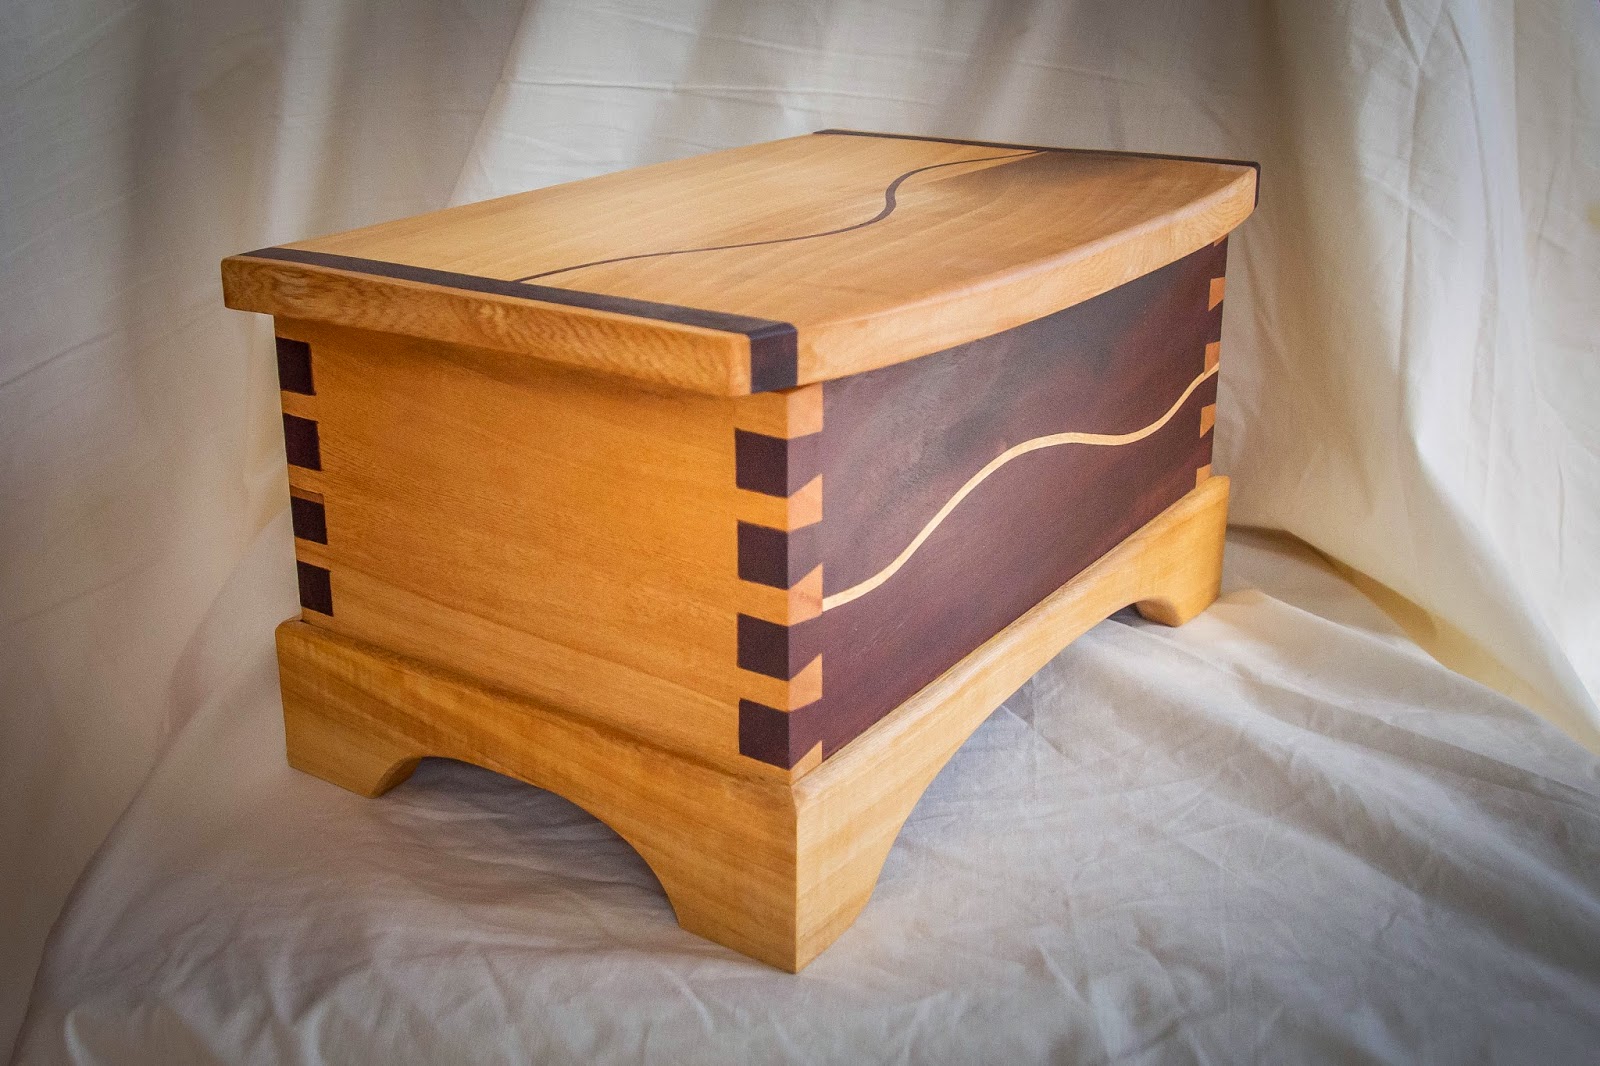 David Barron Furniture: Dovetail Box from Down Under